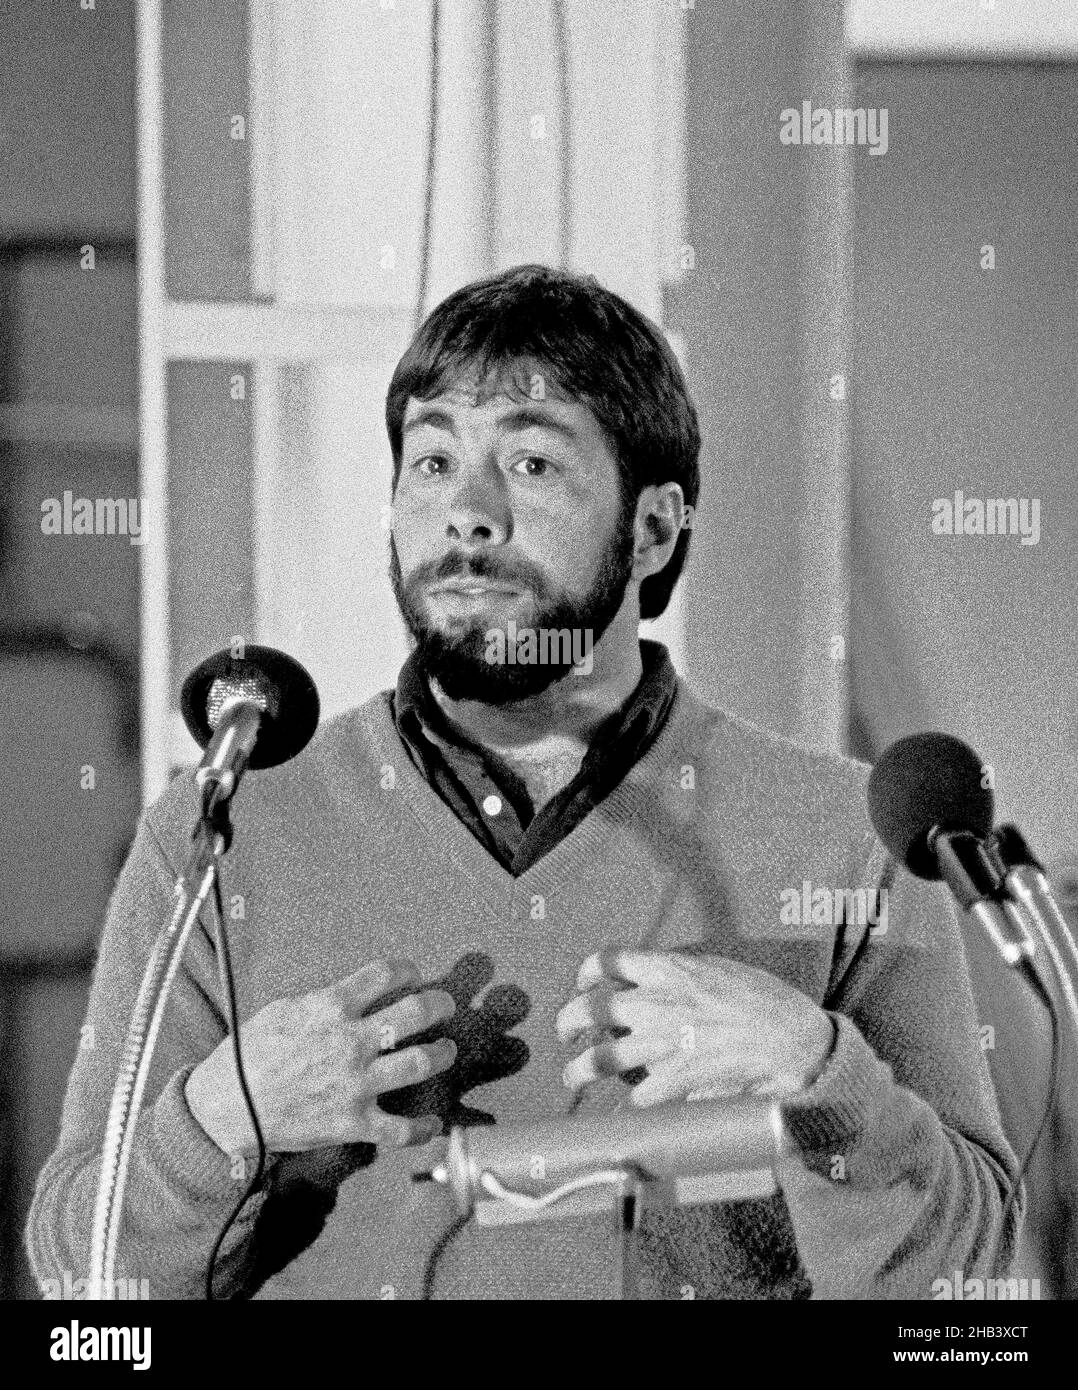 Apple computer co-founder, Steve Wozniak speaking in San Francisco, 1987 Stock Photo